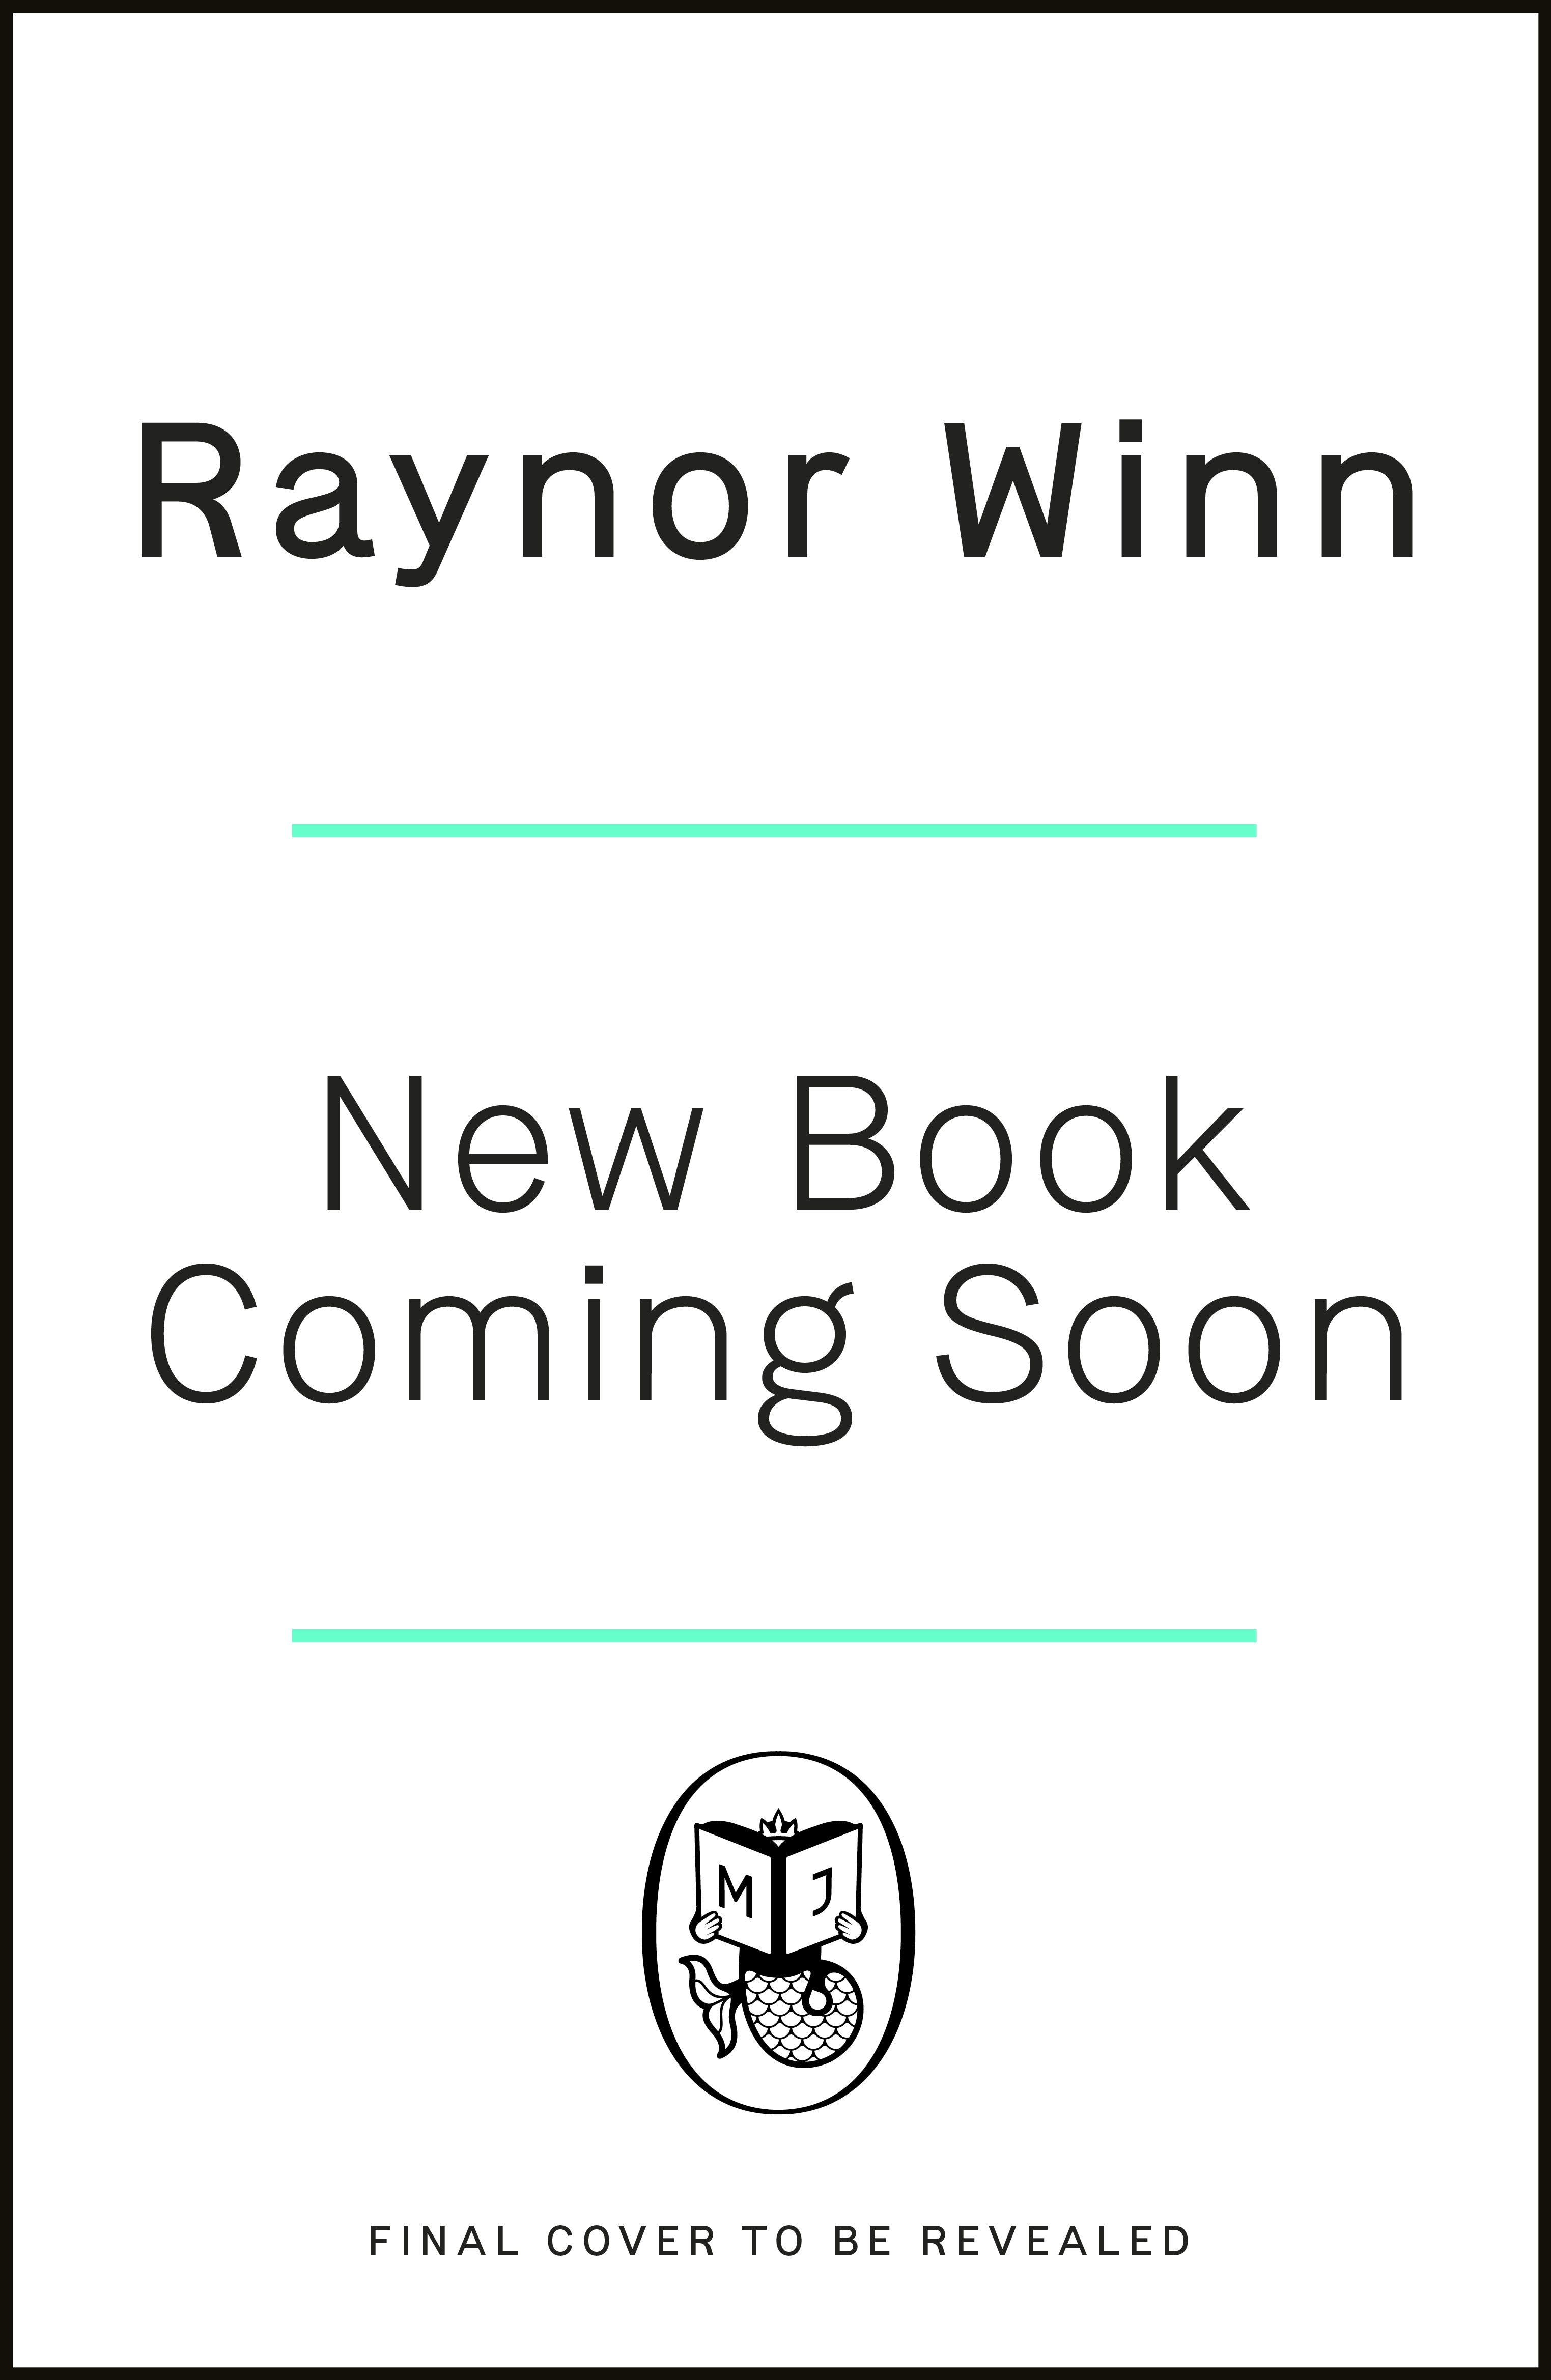 Book “Landlines” by Raynor Winn — September 15, 2022